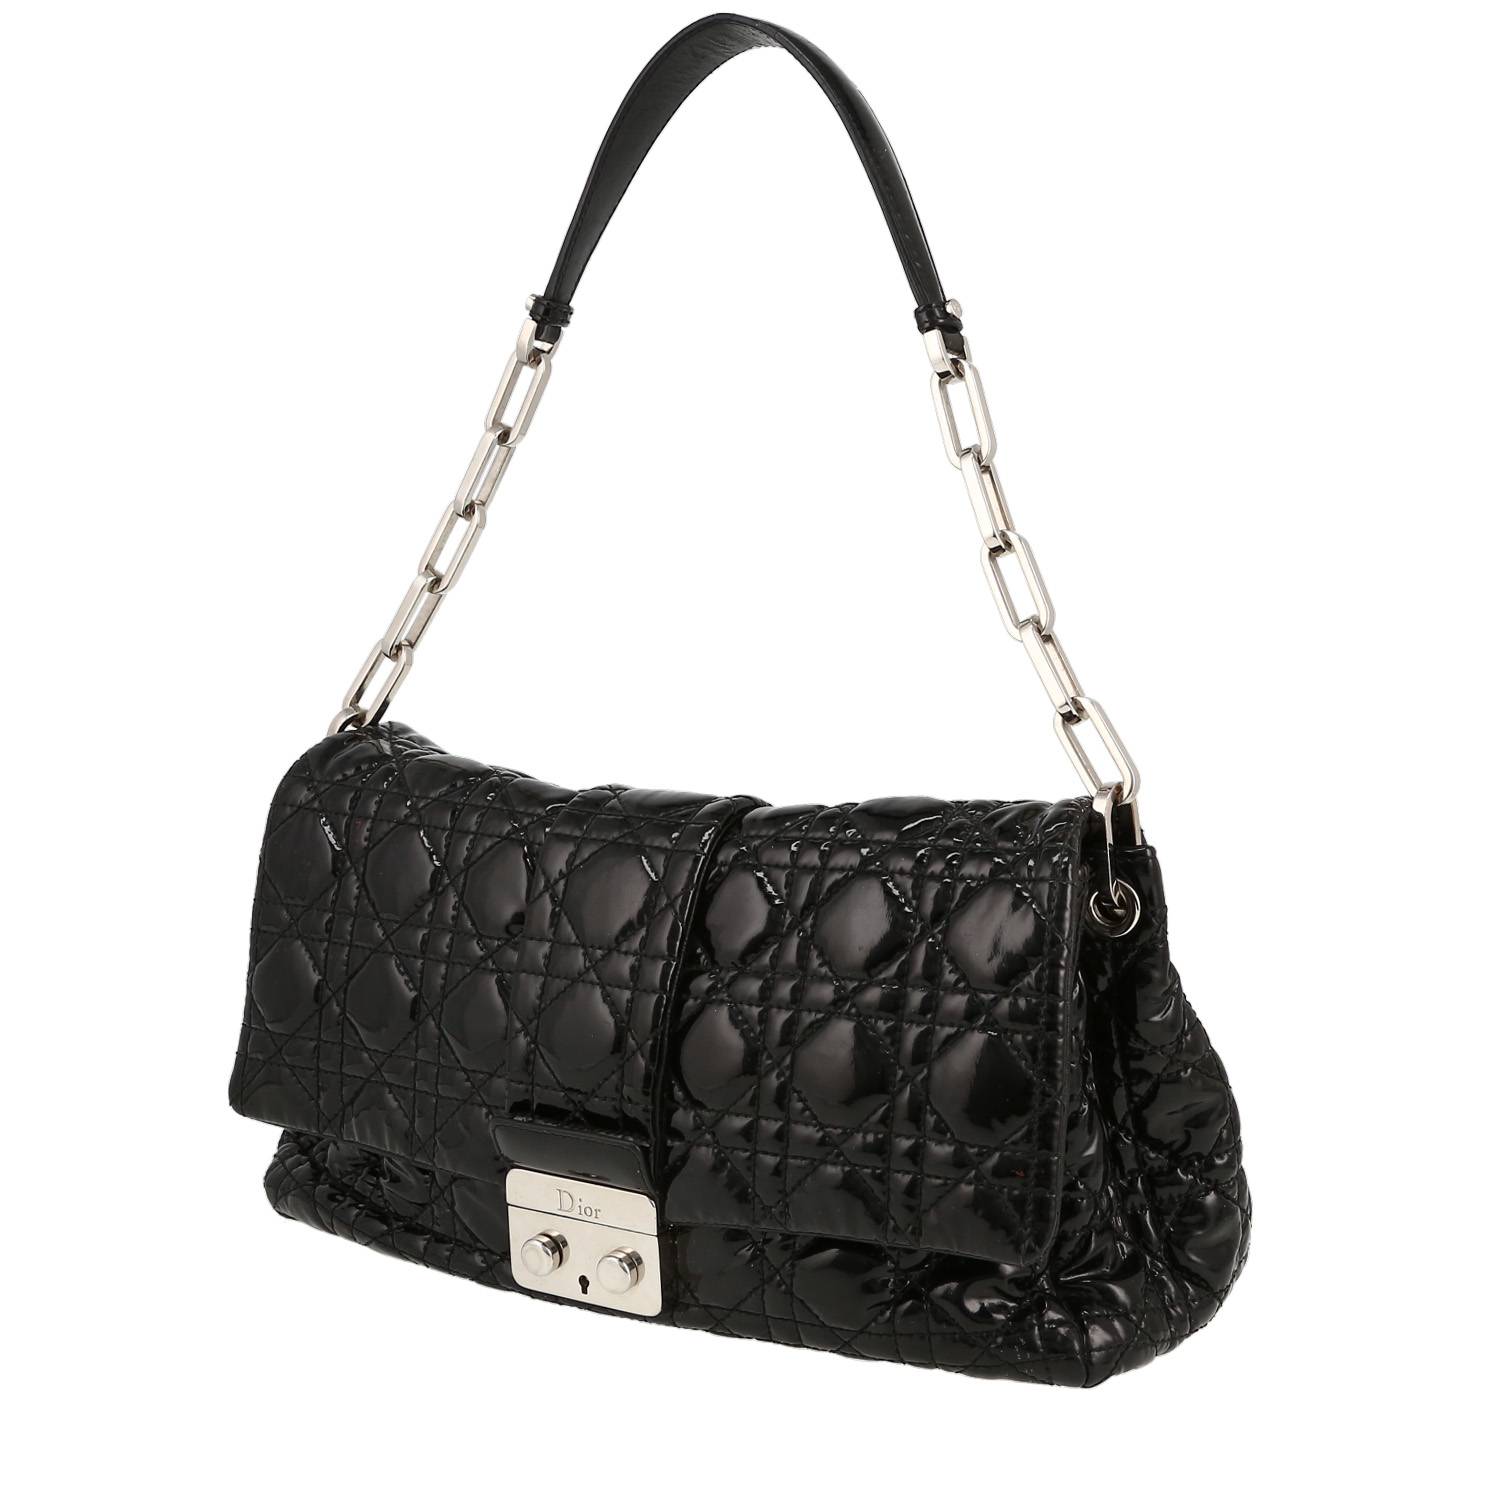 Promenade Handbag In Black Patent Leather